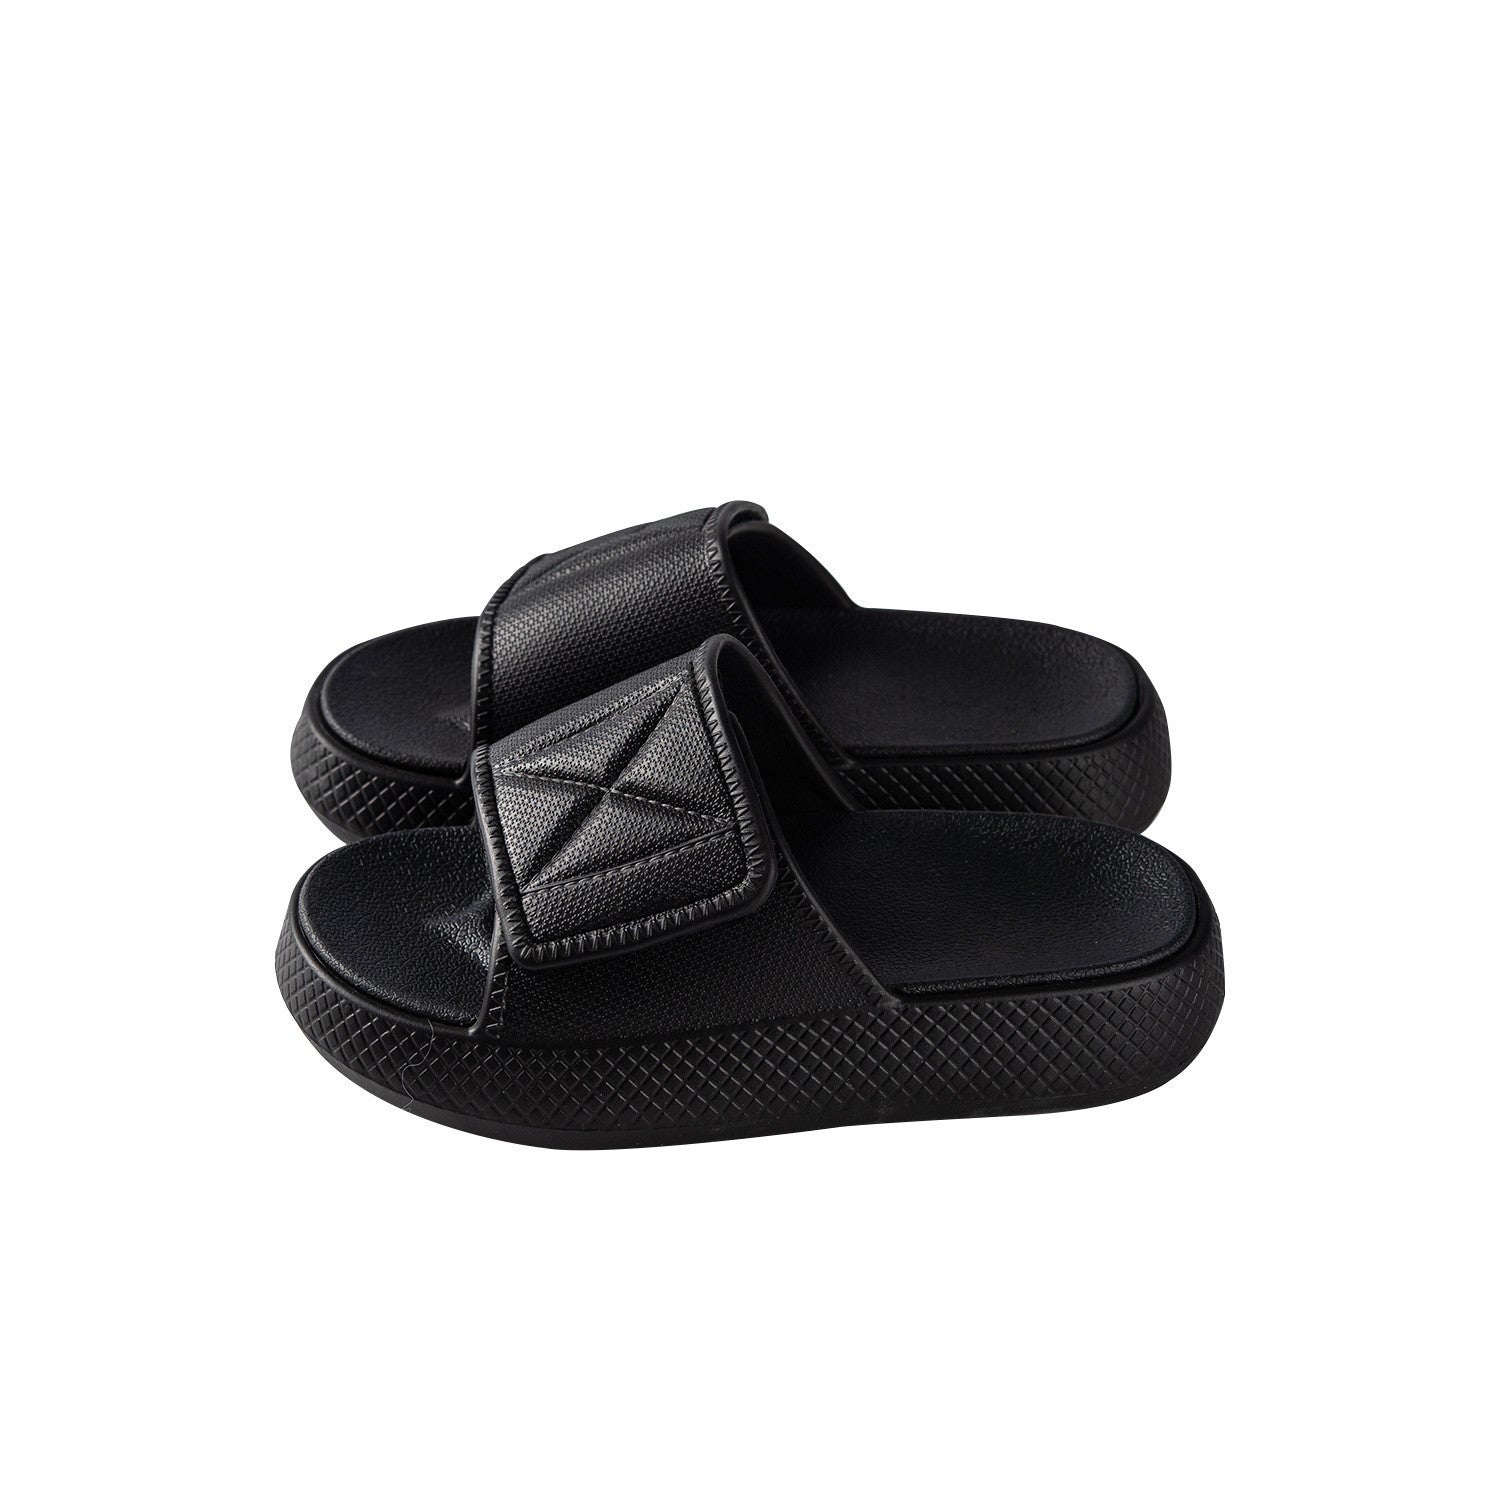 Two-tone Velcro Fashion Platform Slippers Women